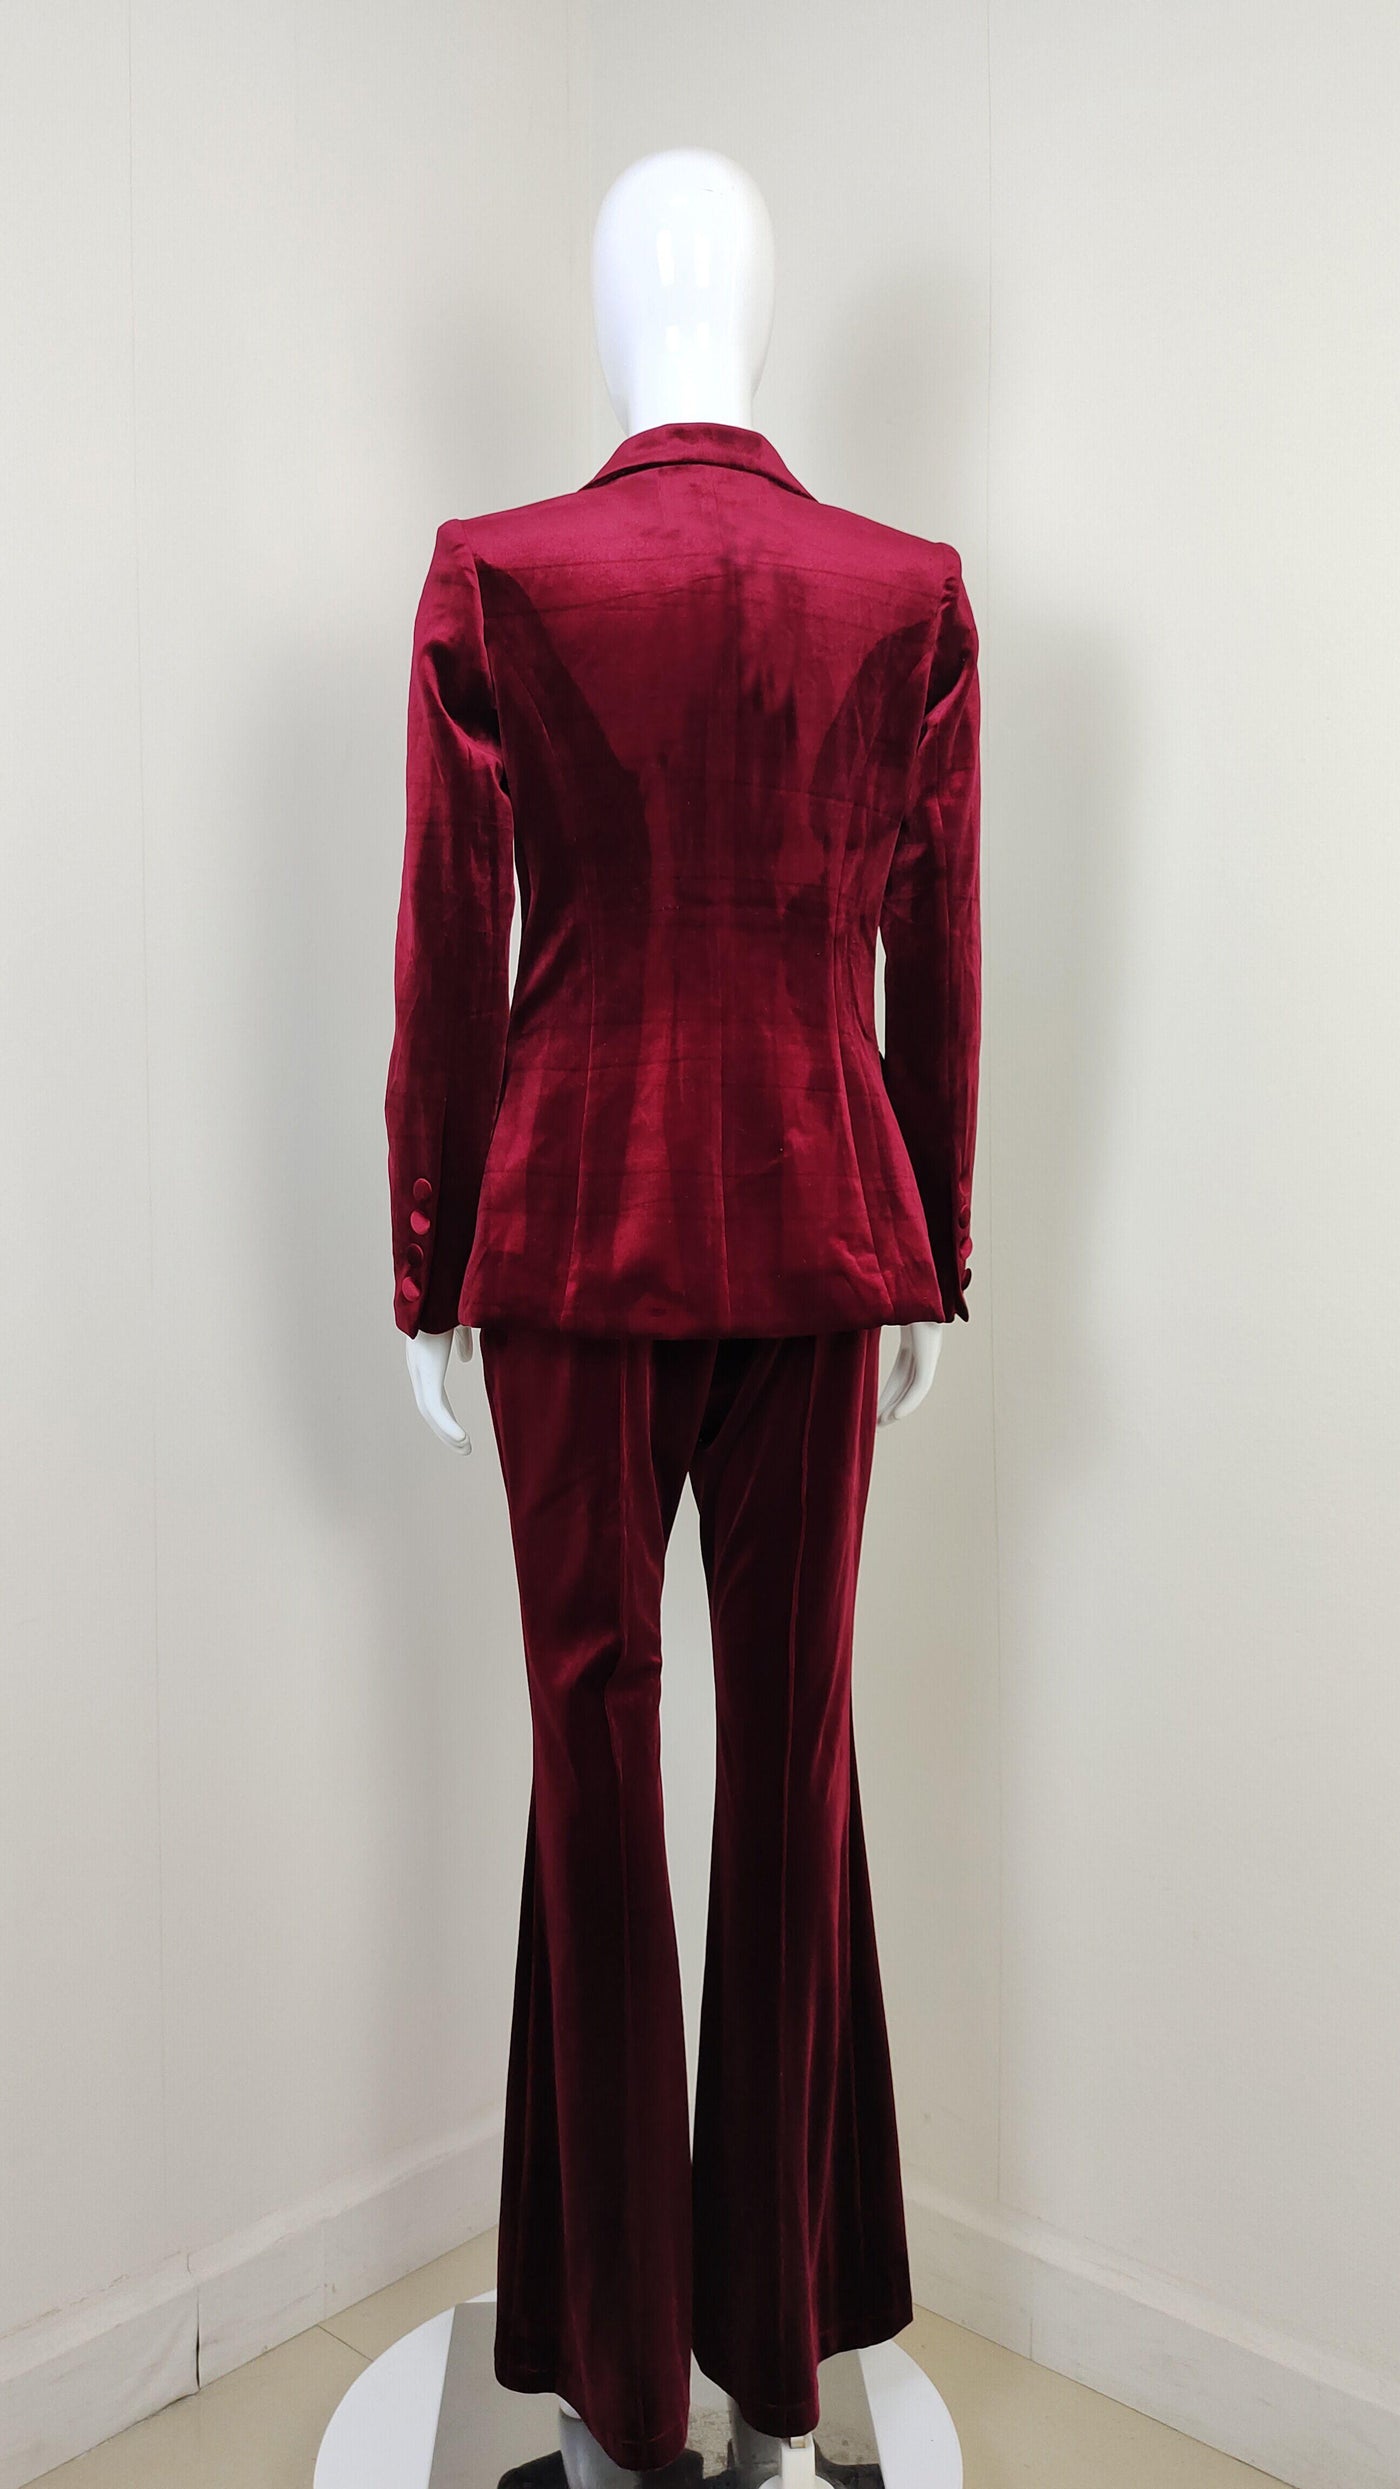 Viola Velvet Blazer Top & Flare Pants Set - Hot fashionista